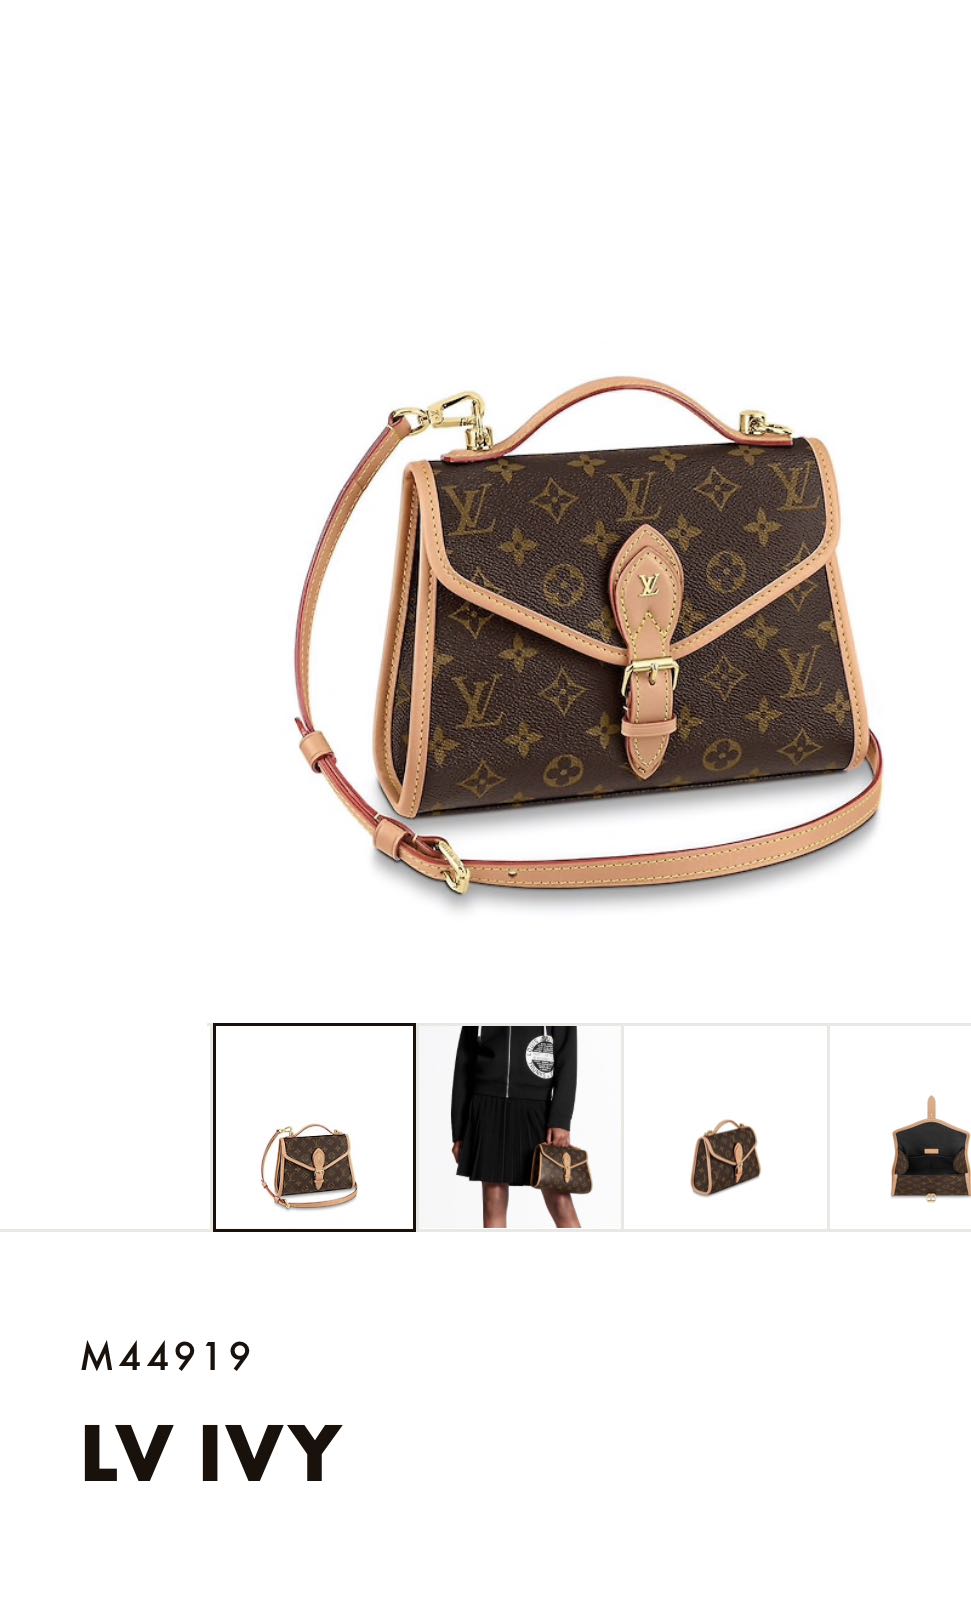 Louis Vuitton Alma BB Review, Magnolia Epi Leather, Mod Shots